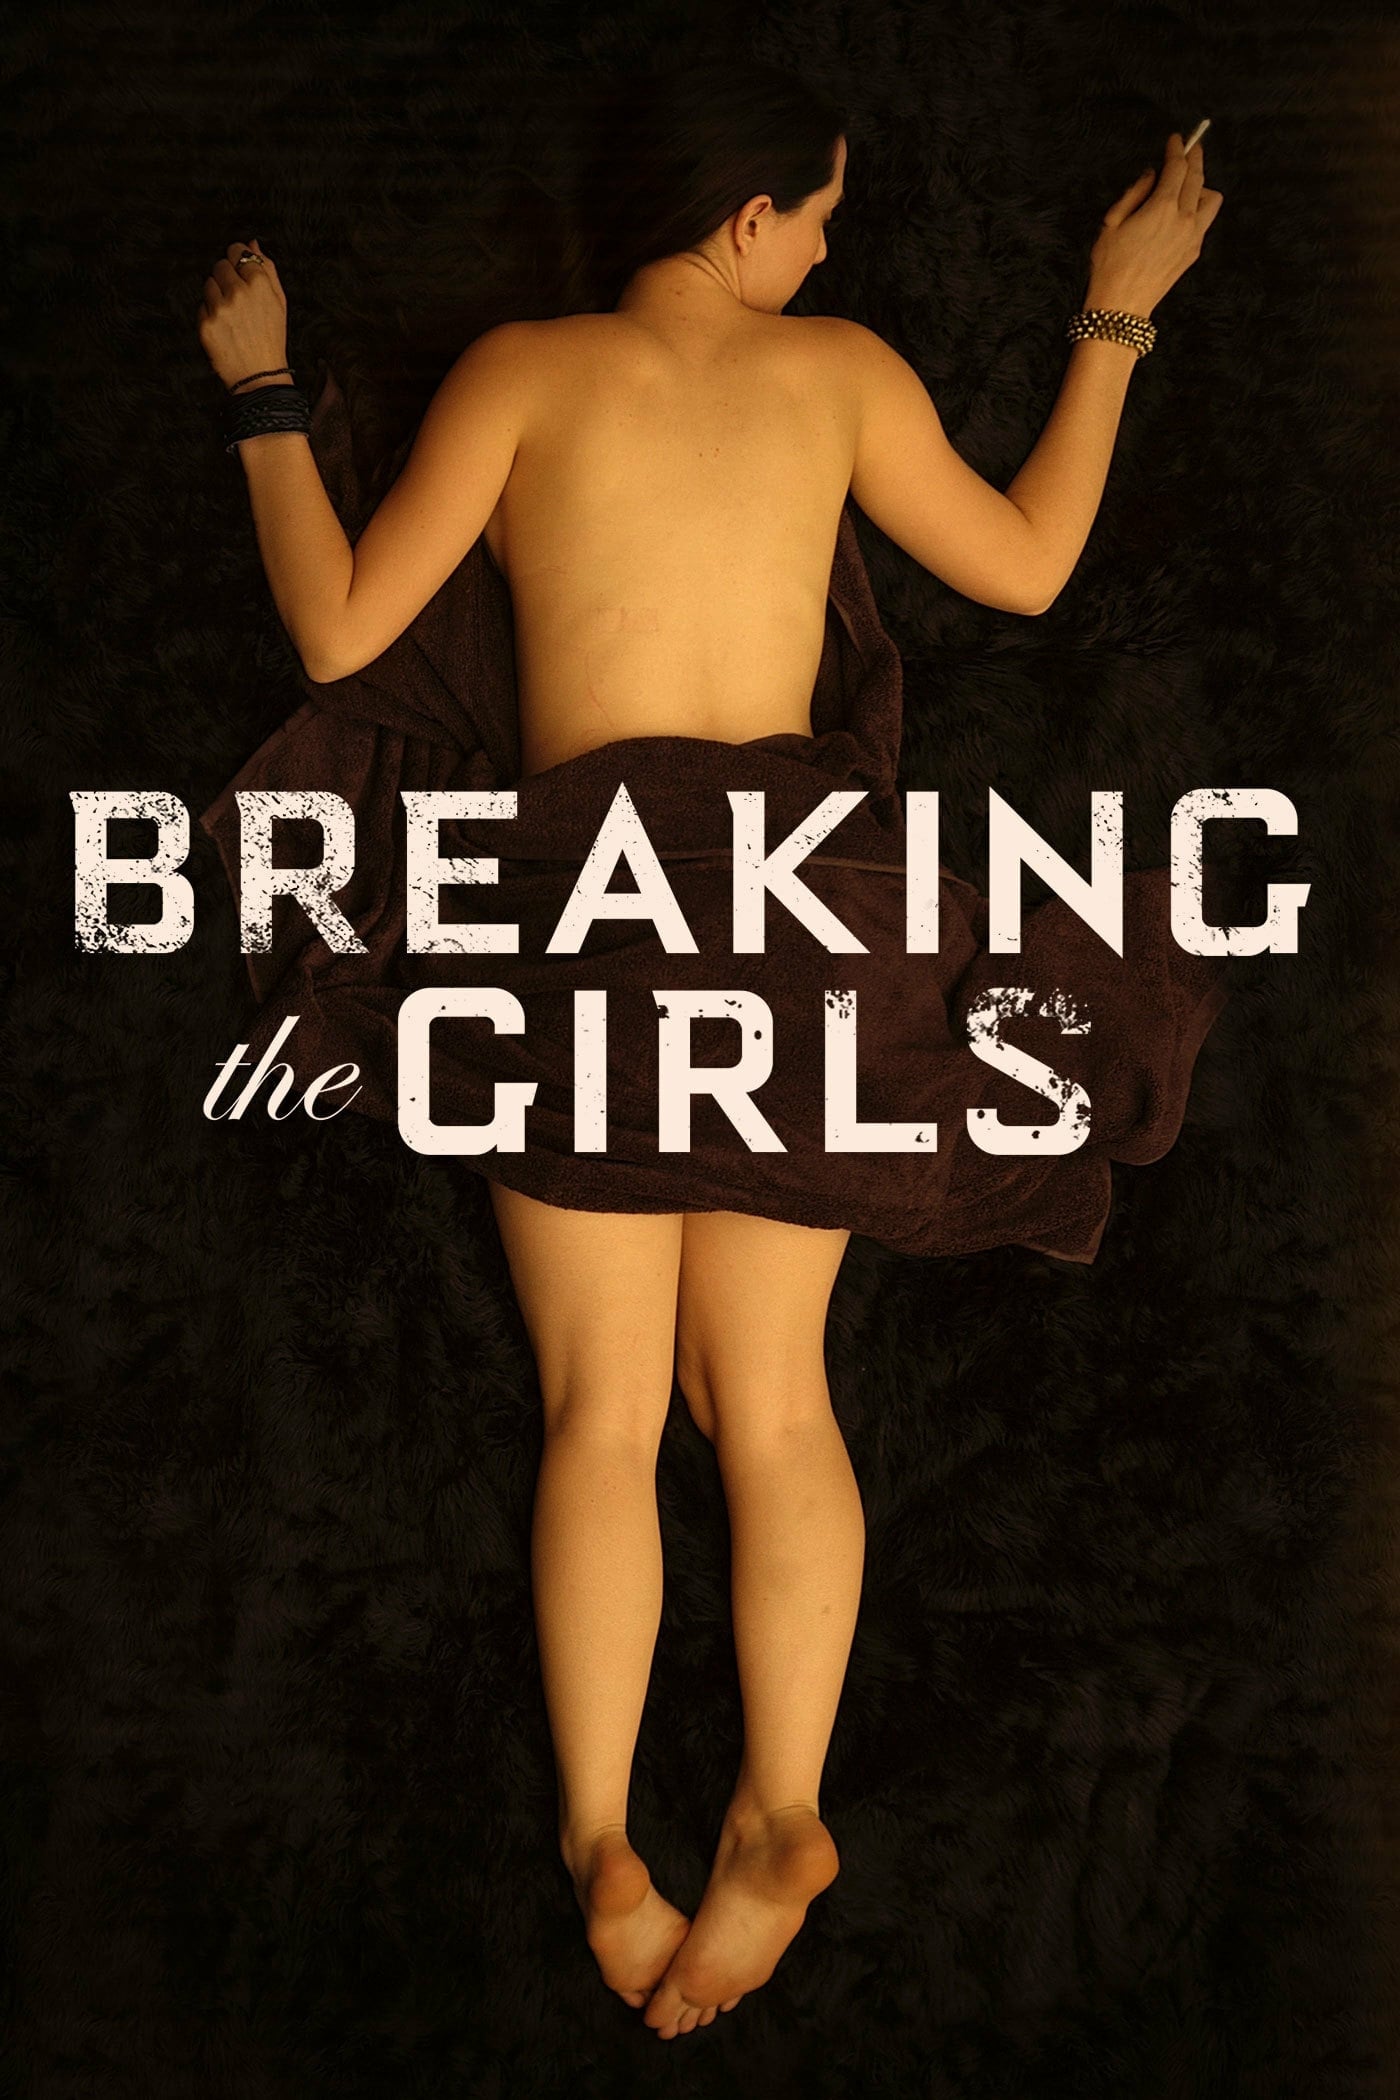 Breaking the Girls (2013)